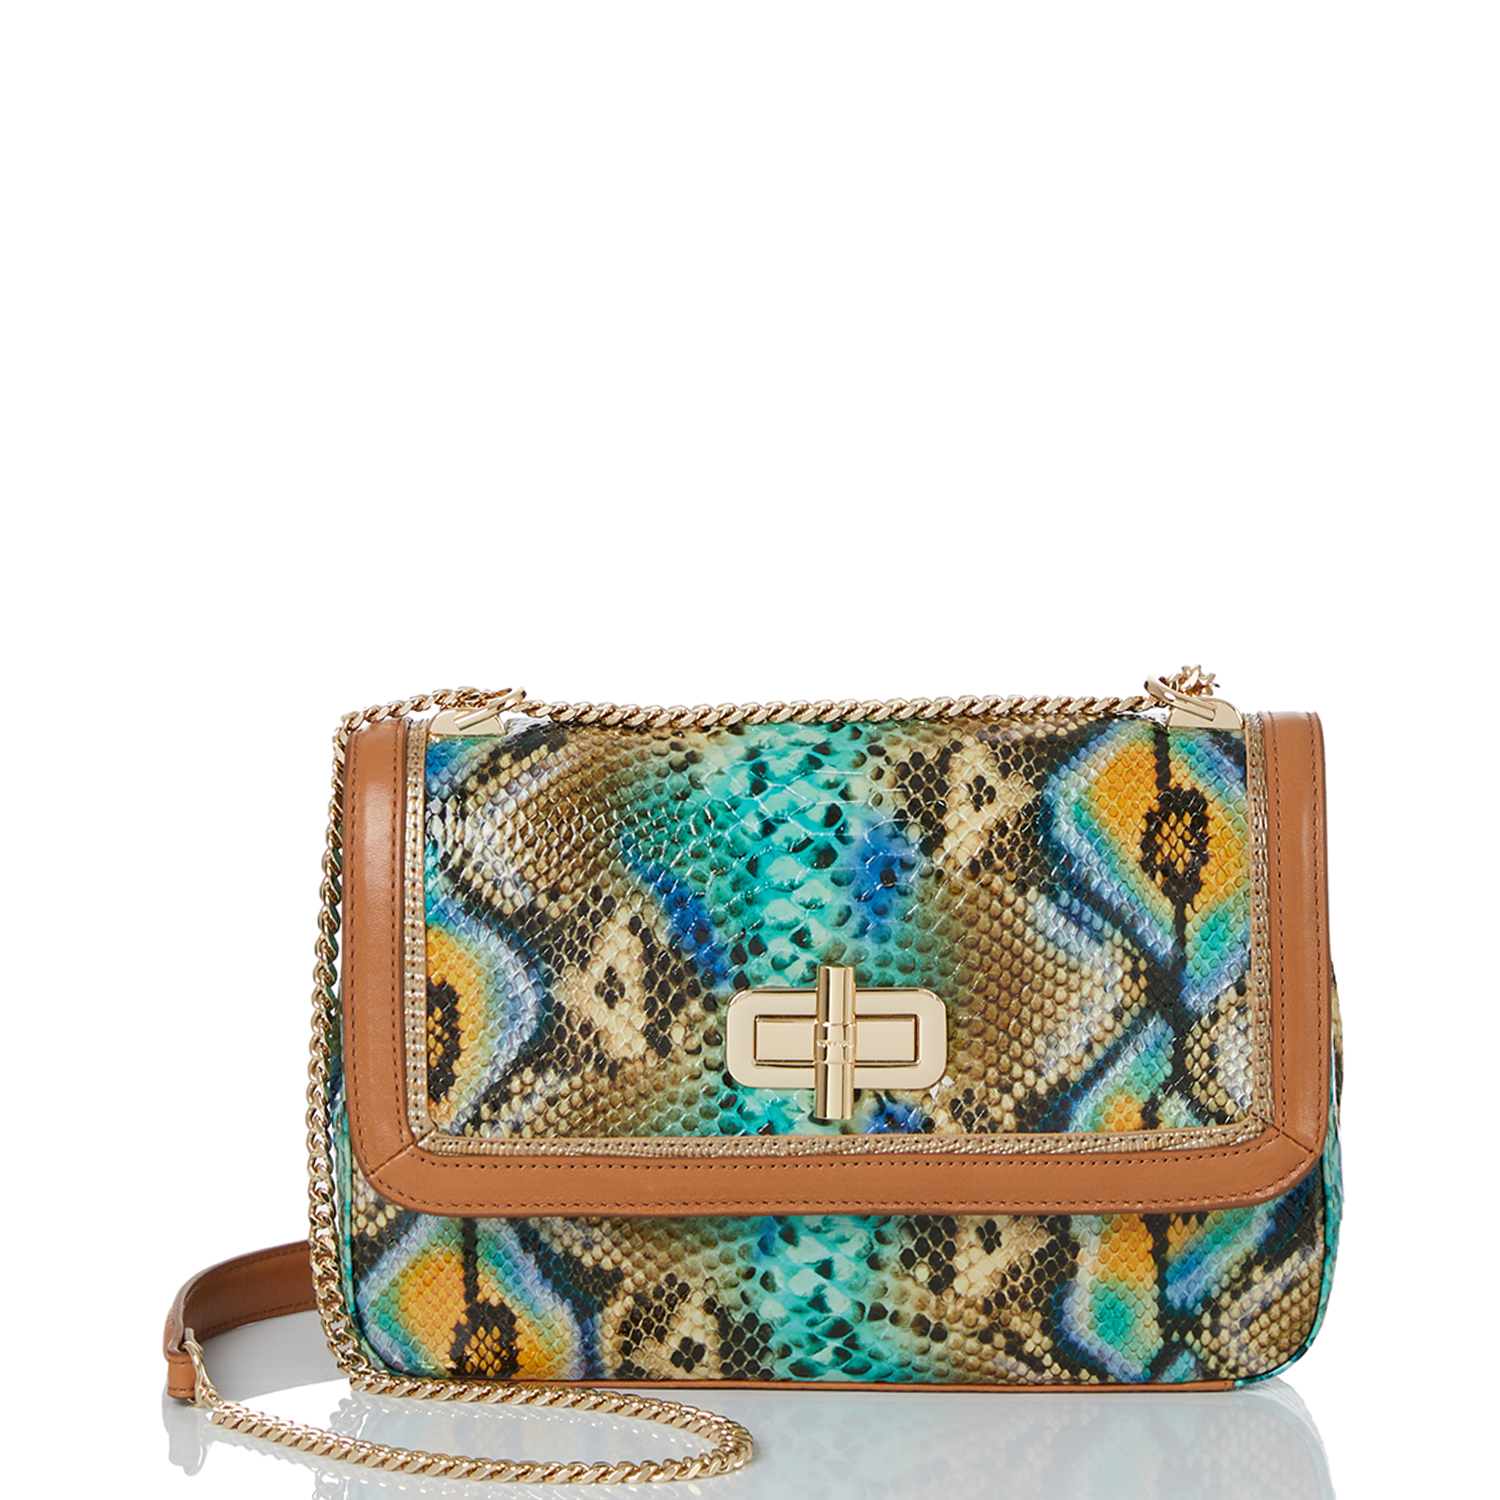 Wholesale Large Capacity Designer Handbag Purse Top Handle Chain Strap  Shoulder Bag Animal Print Snakeskin Pattern Women Tote Bag From  m.